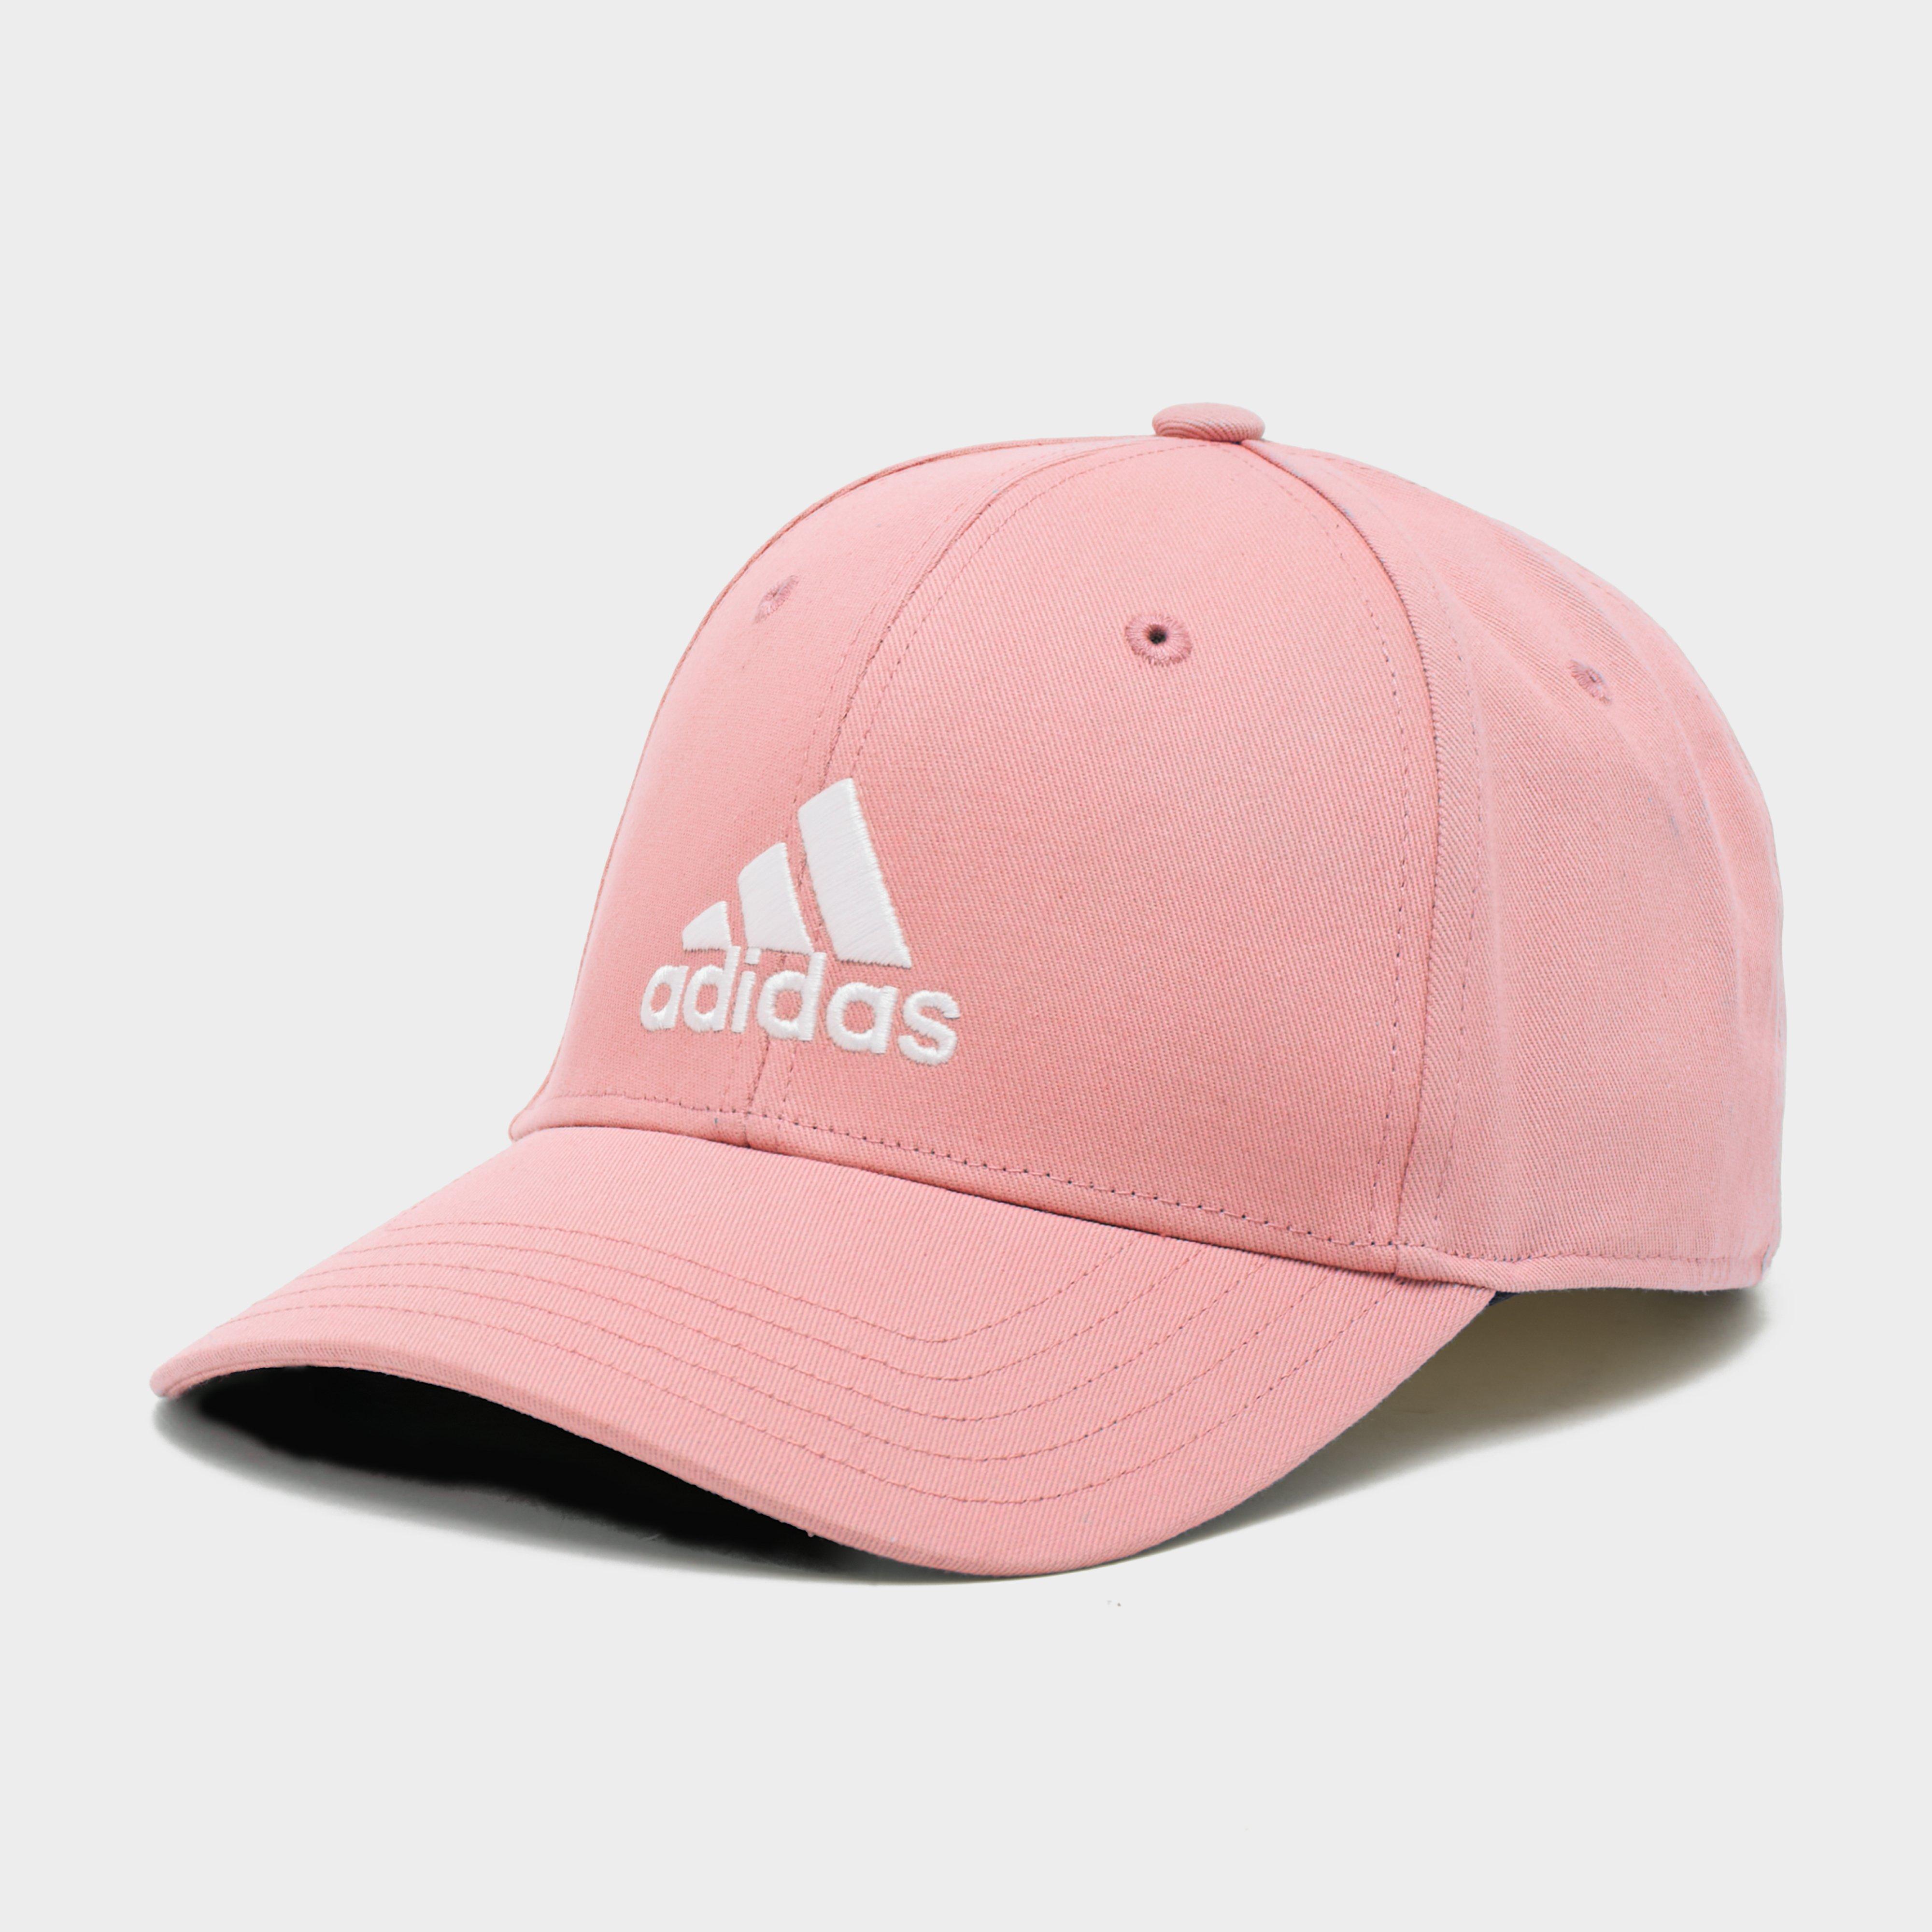 adidas Women's Baseball Cap, Pink